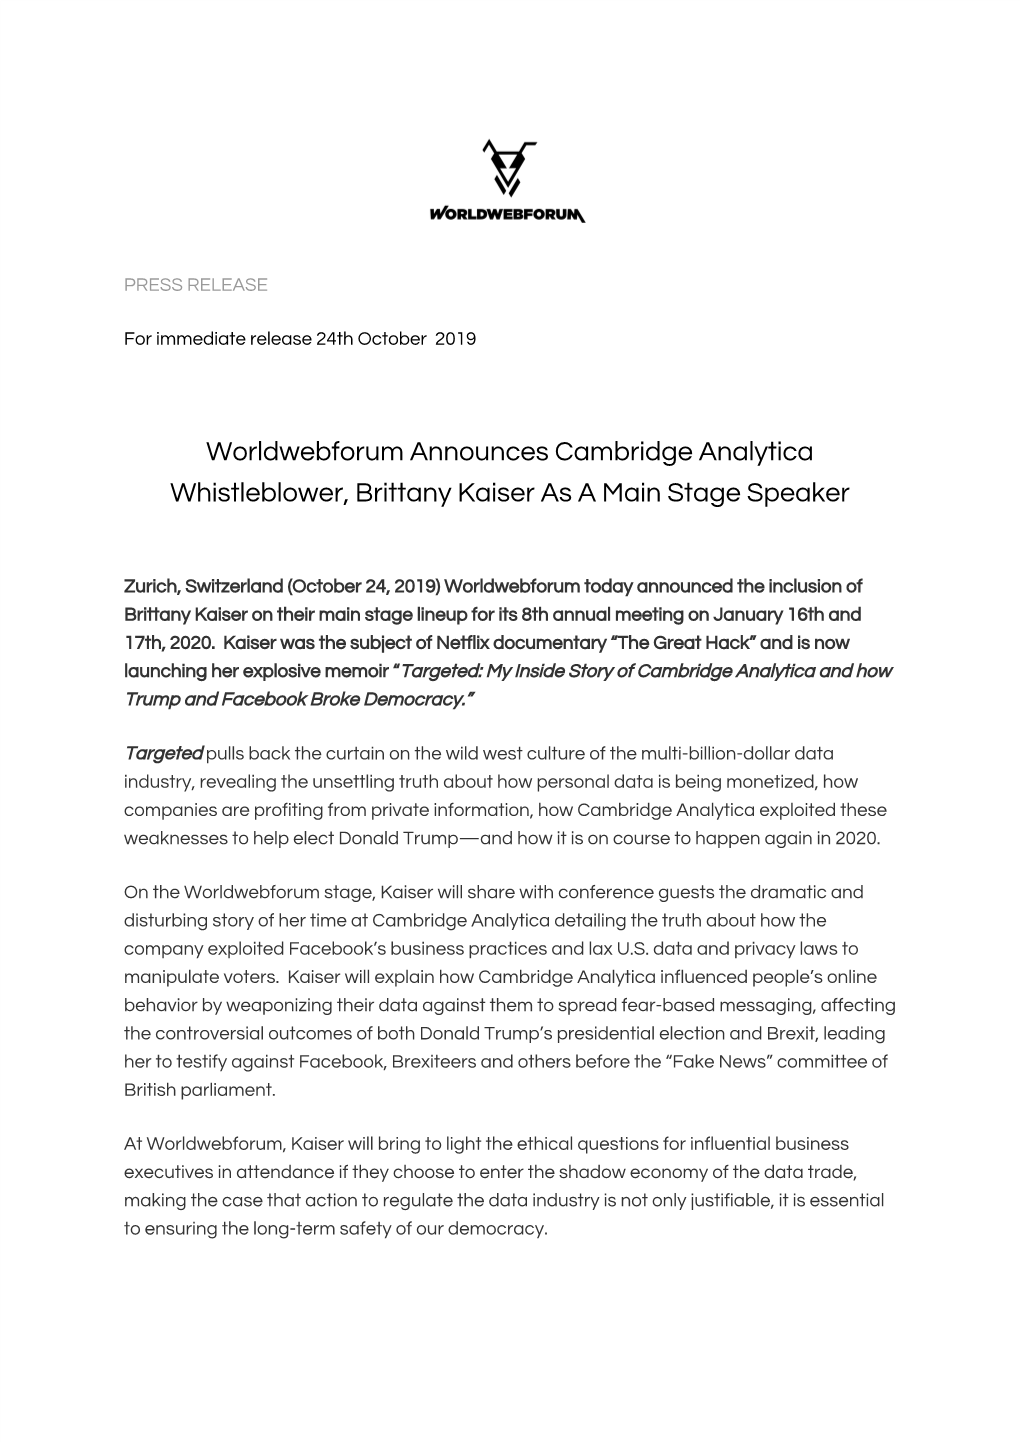 Worldwebforum Announces Cambridge Analytica Whistleblower, Brittany Kaiser As a Main Stage Speaker